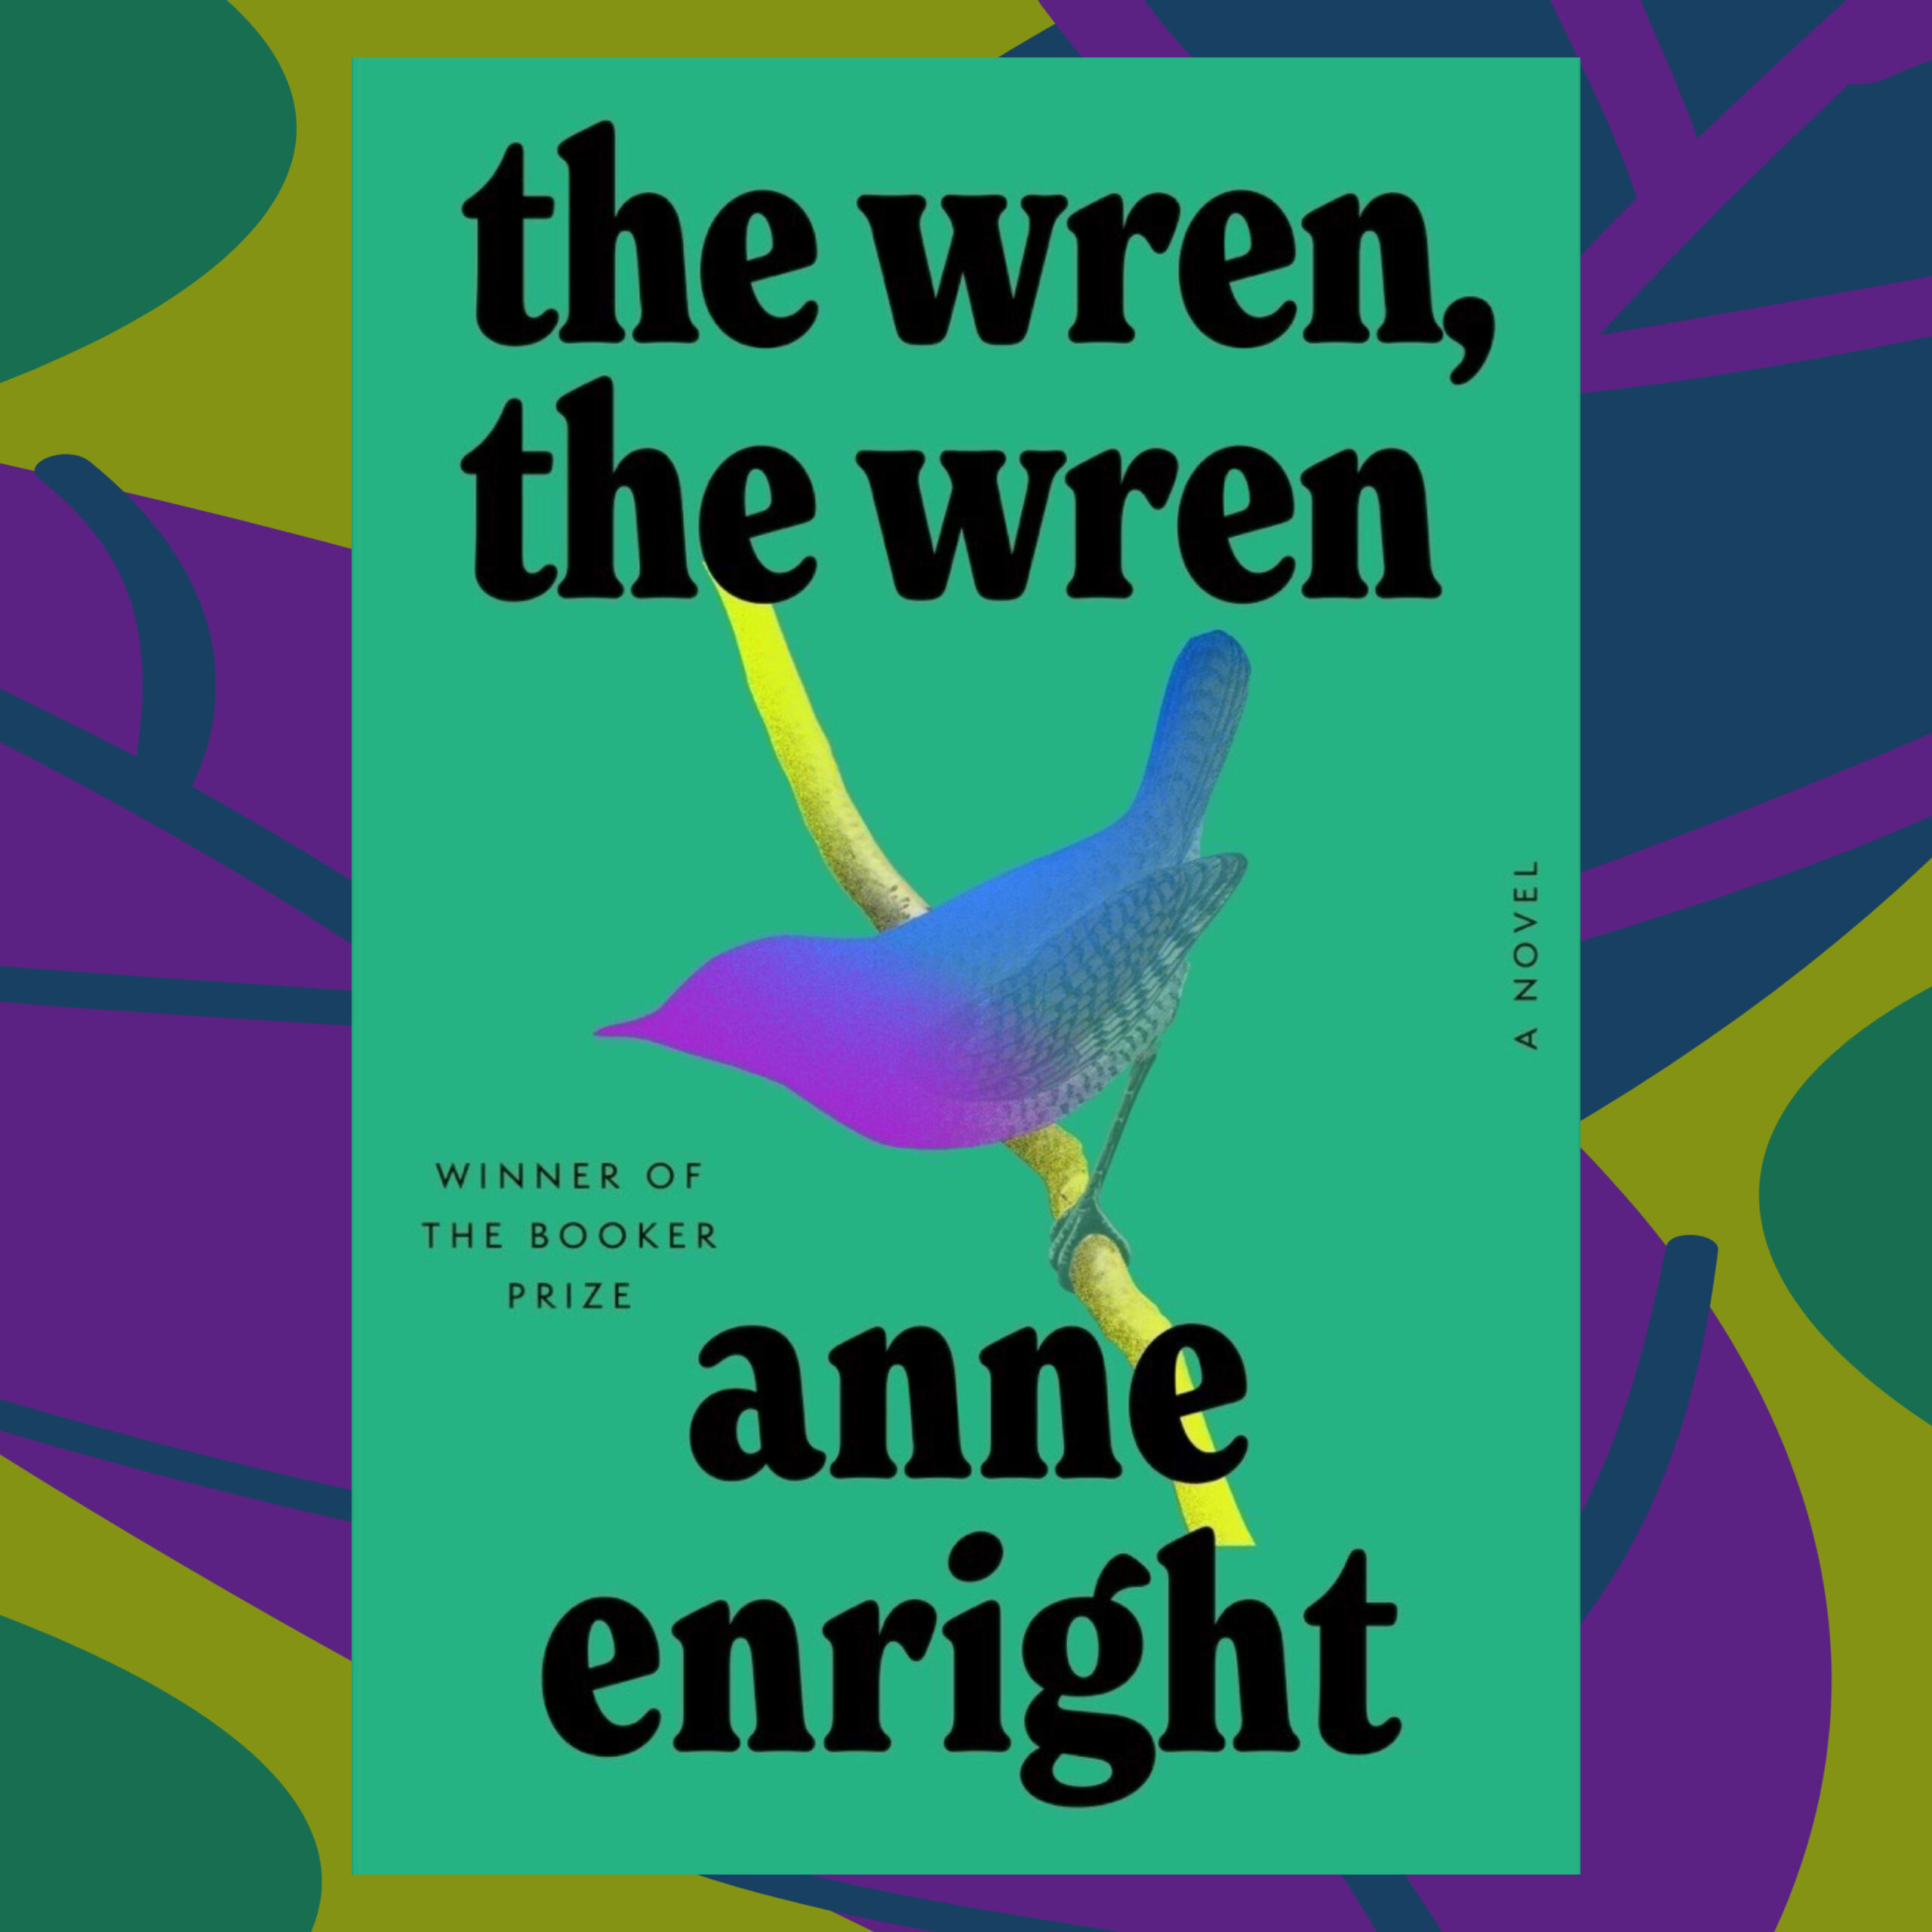 The Book Show - Anne Enright - The Wren, The Wren